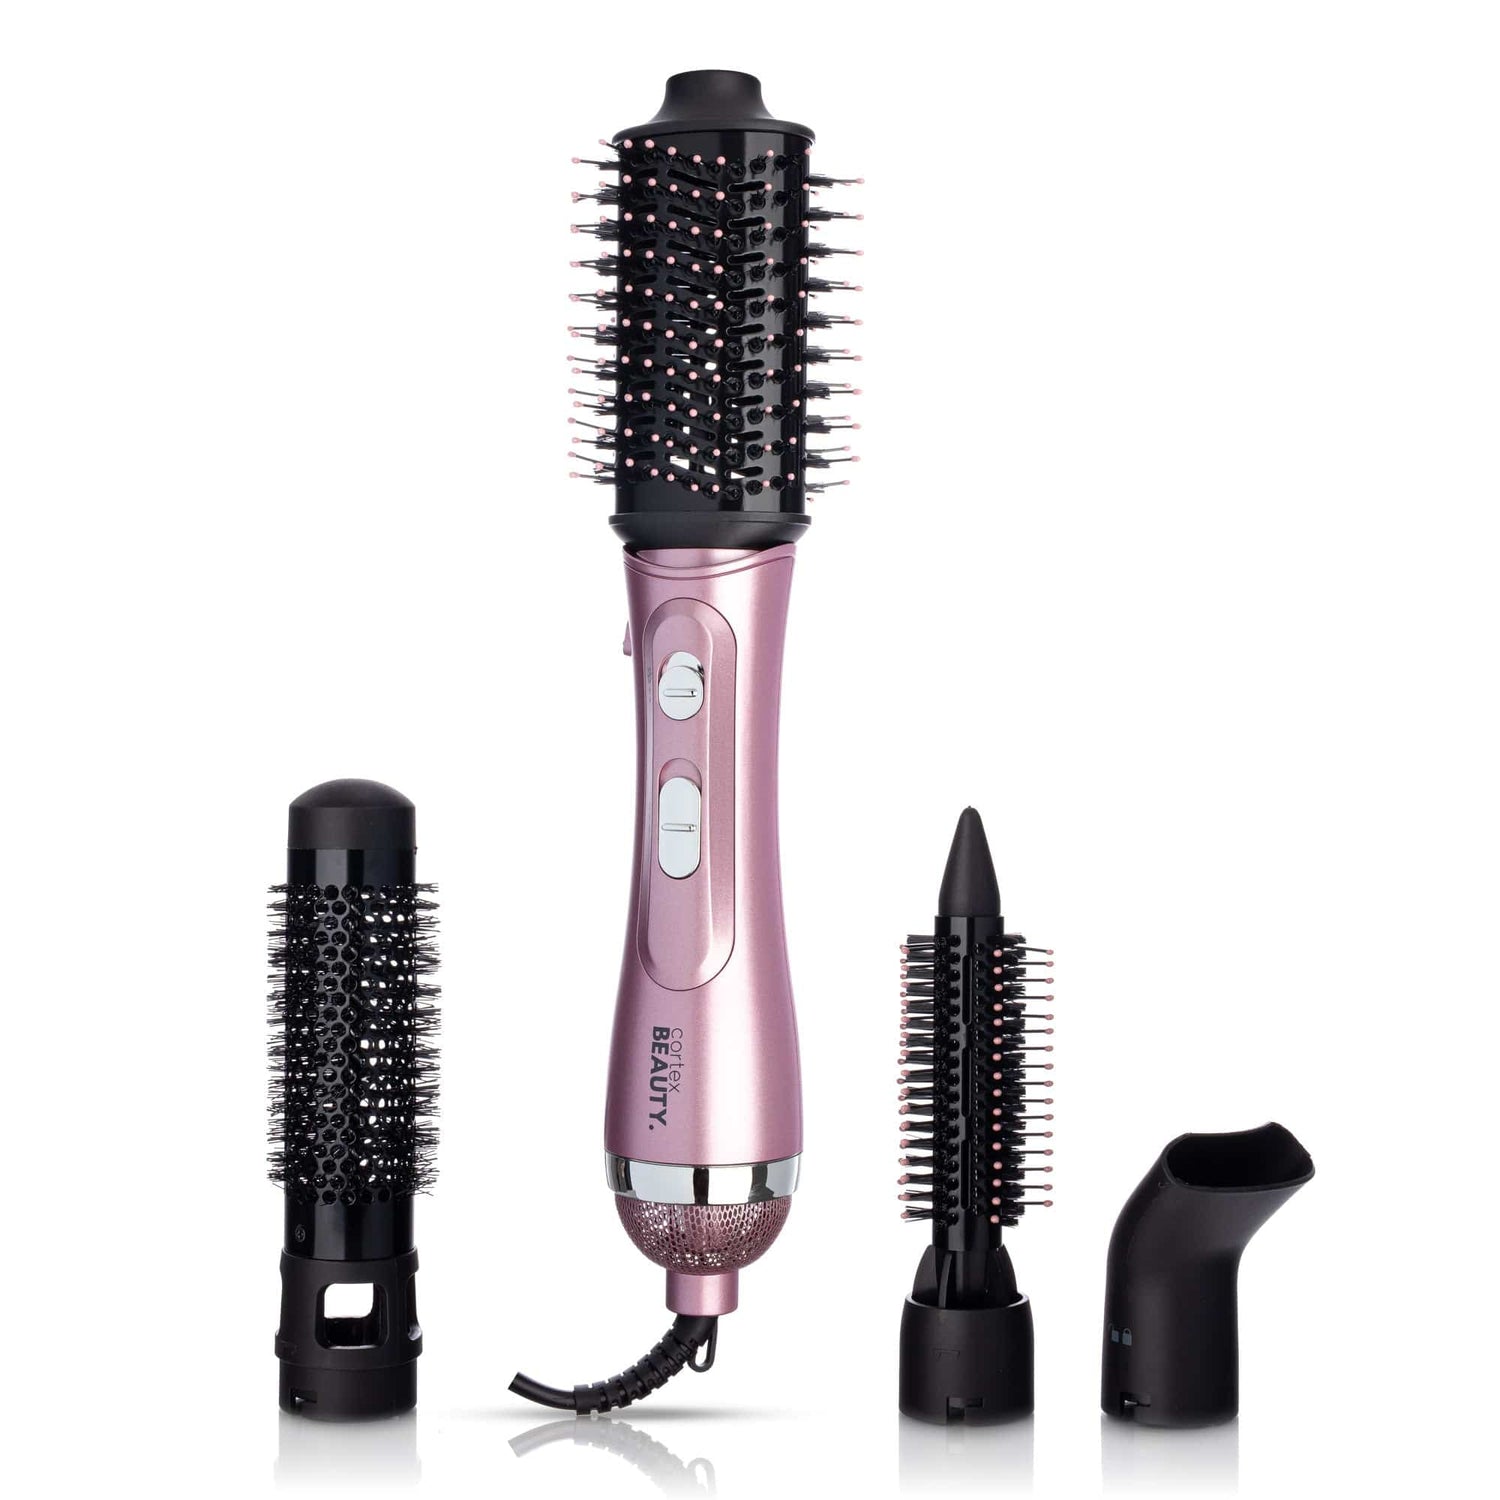 Cortex Beauty Blush Pink Air Styler | 4-In-1 Hot Air Styler Brush